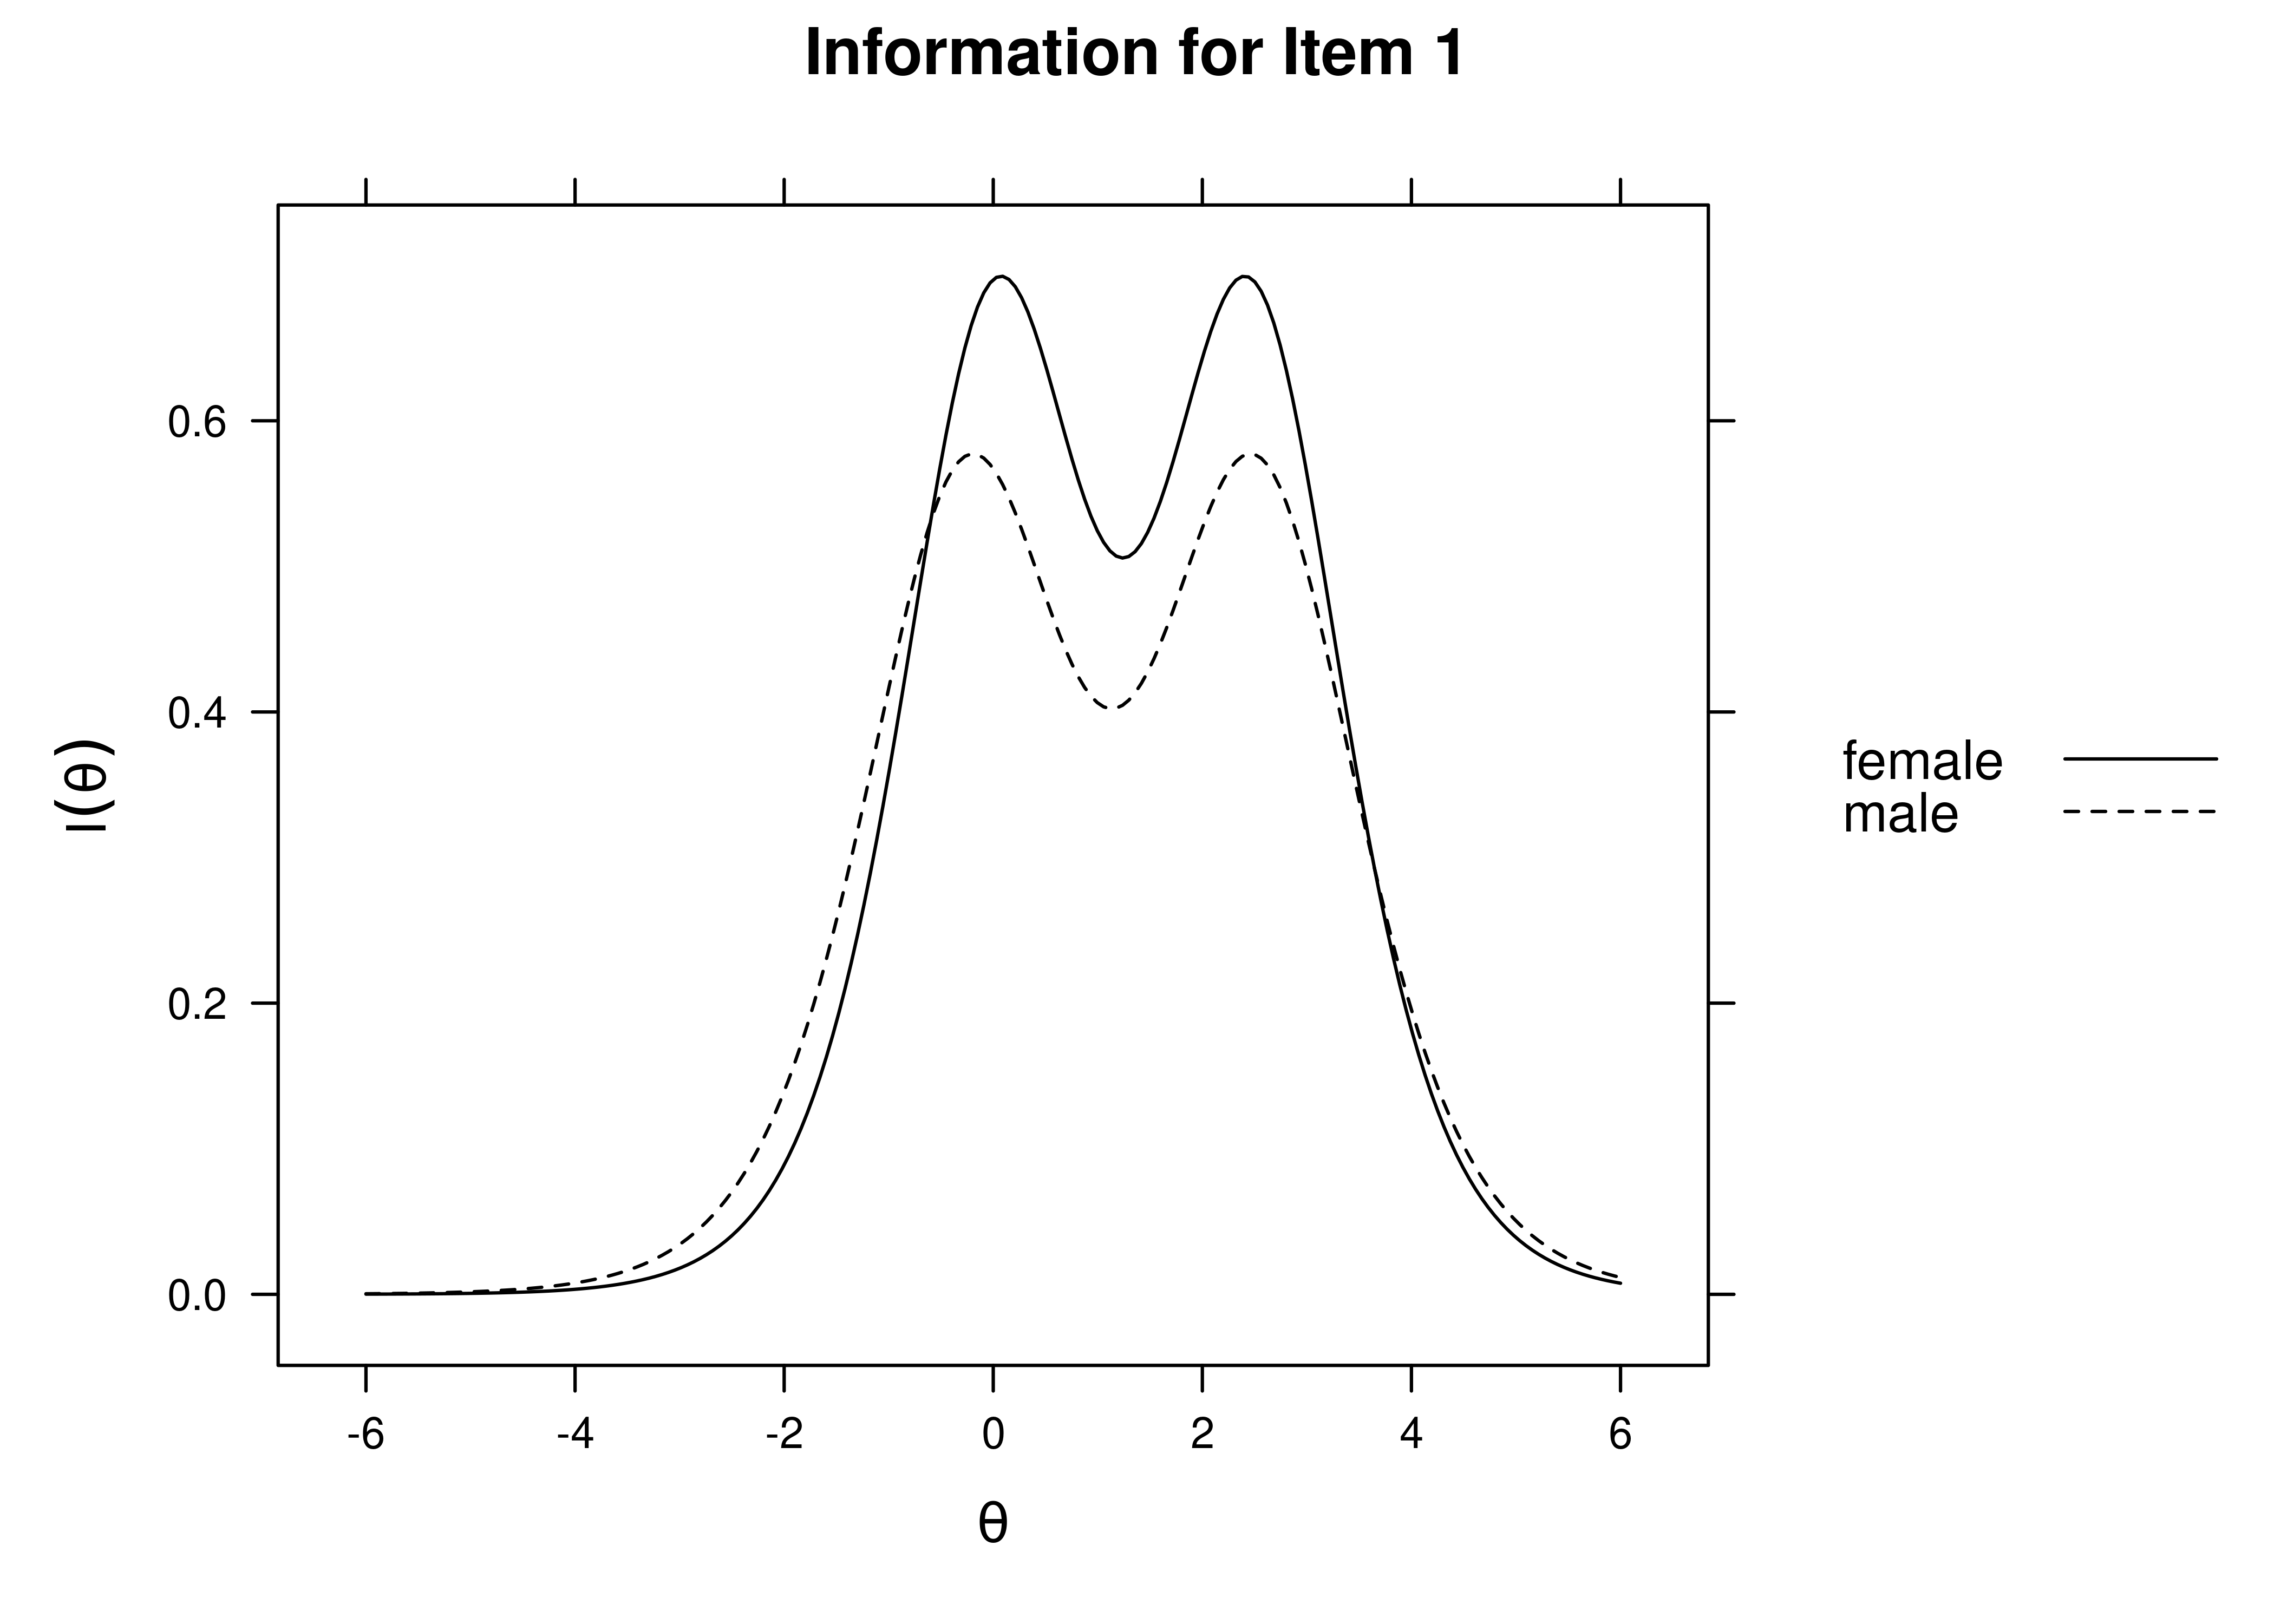 Item Information Curves by Sex: Item 1.